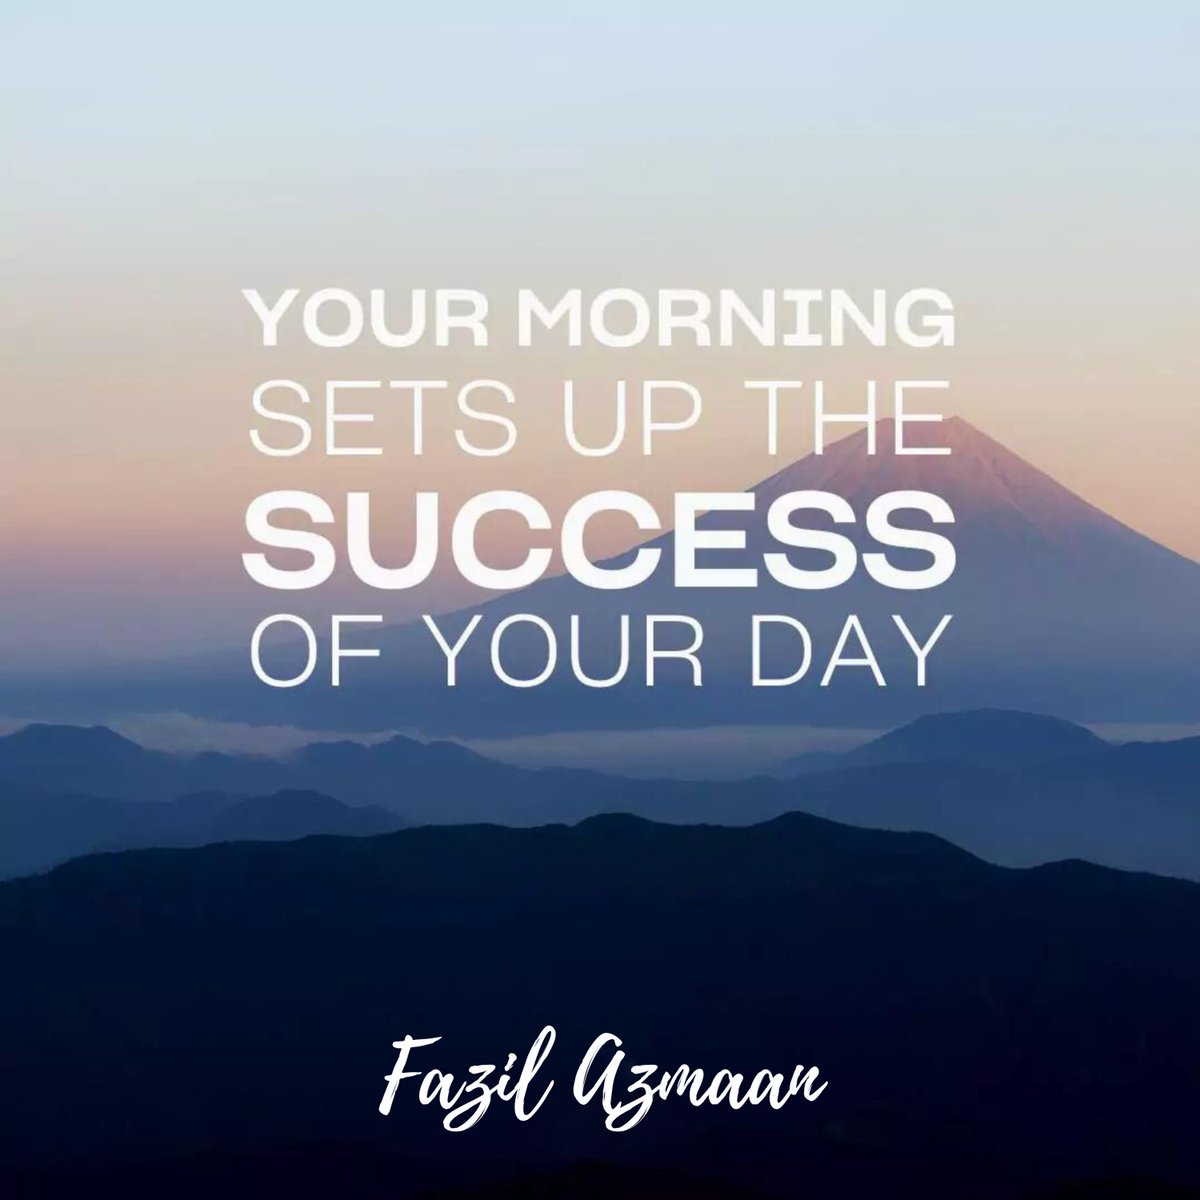 Here's your Friday morning motivation! #Success #Good-Morning #KeytoSuccess #MorningMood